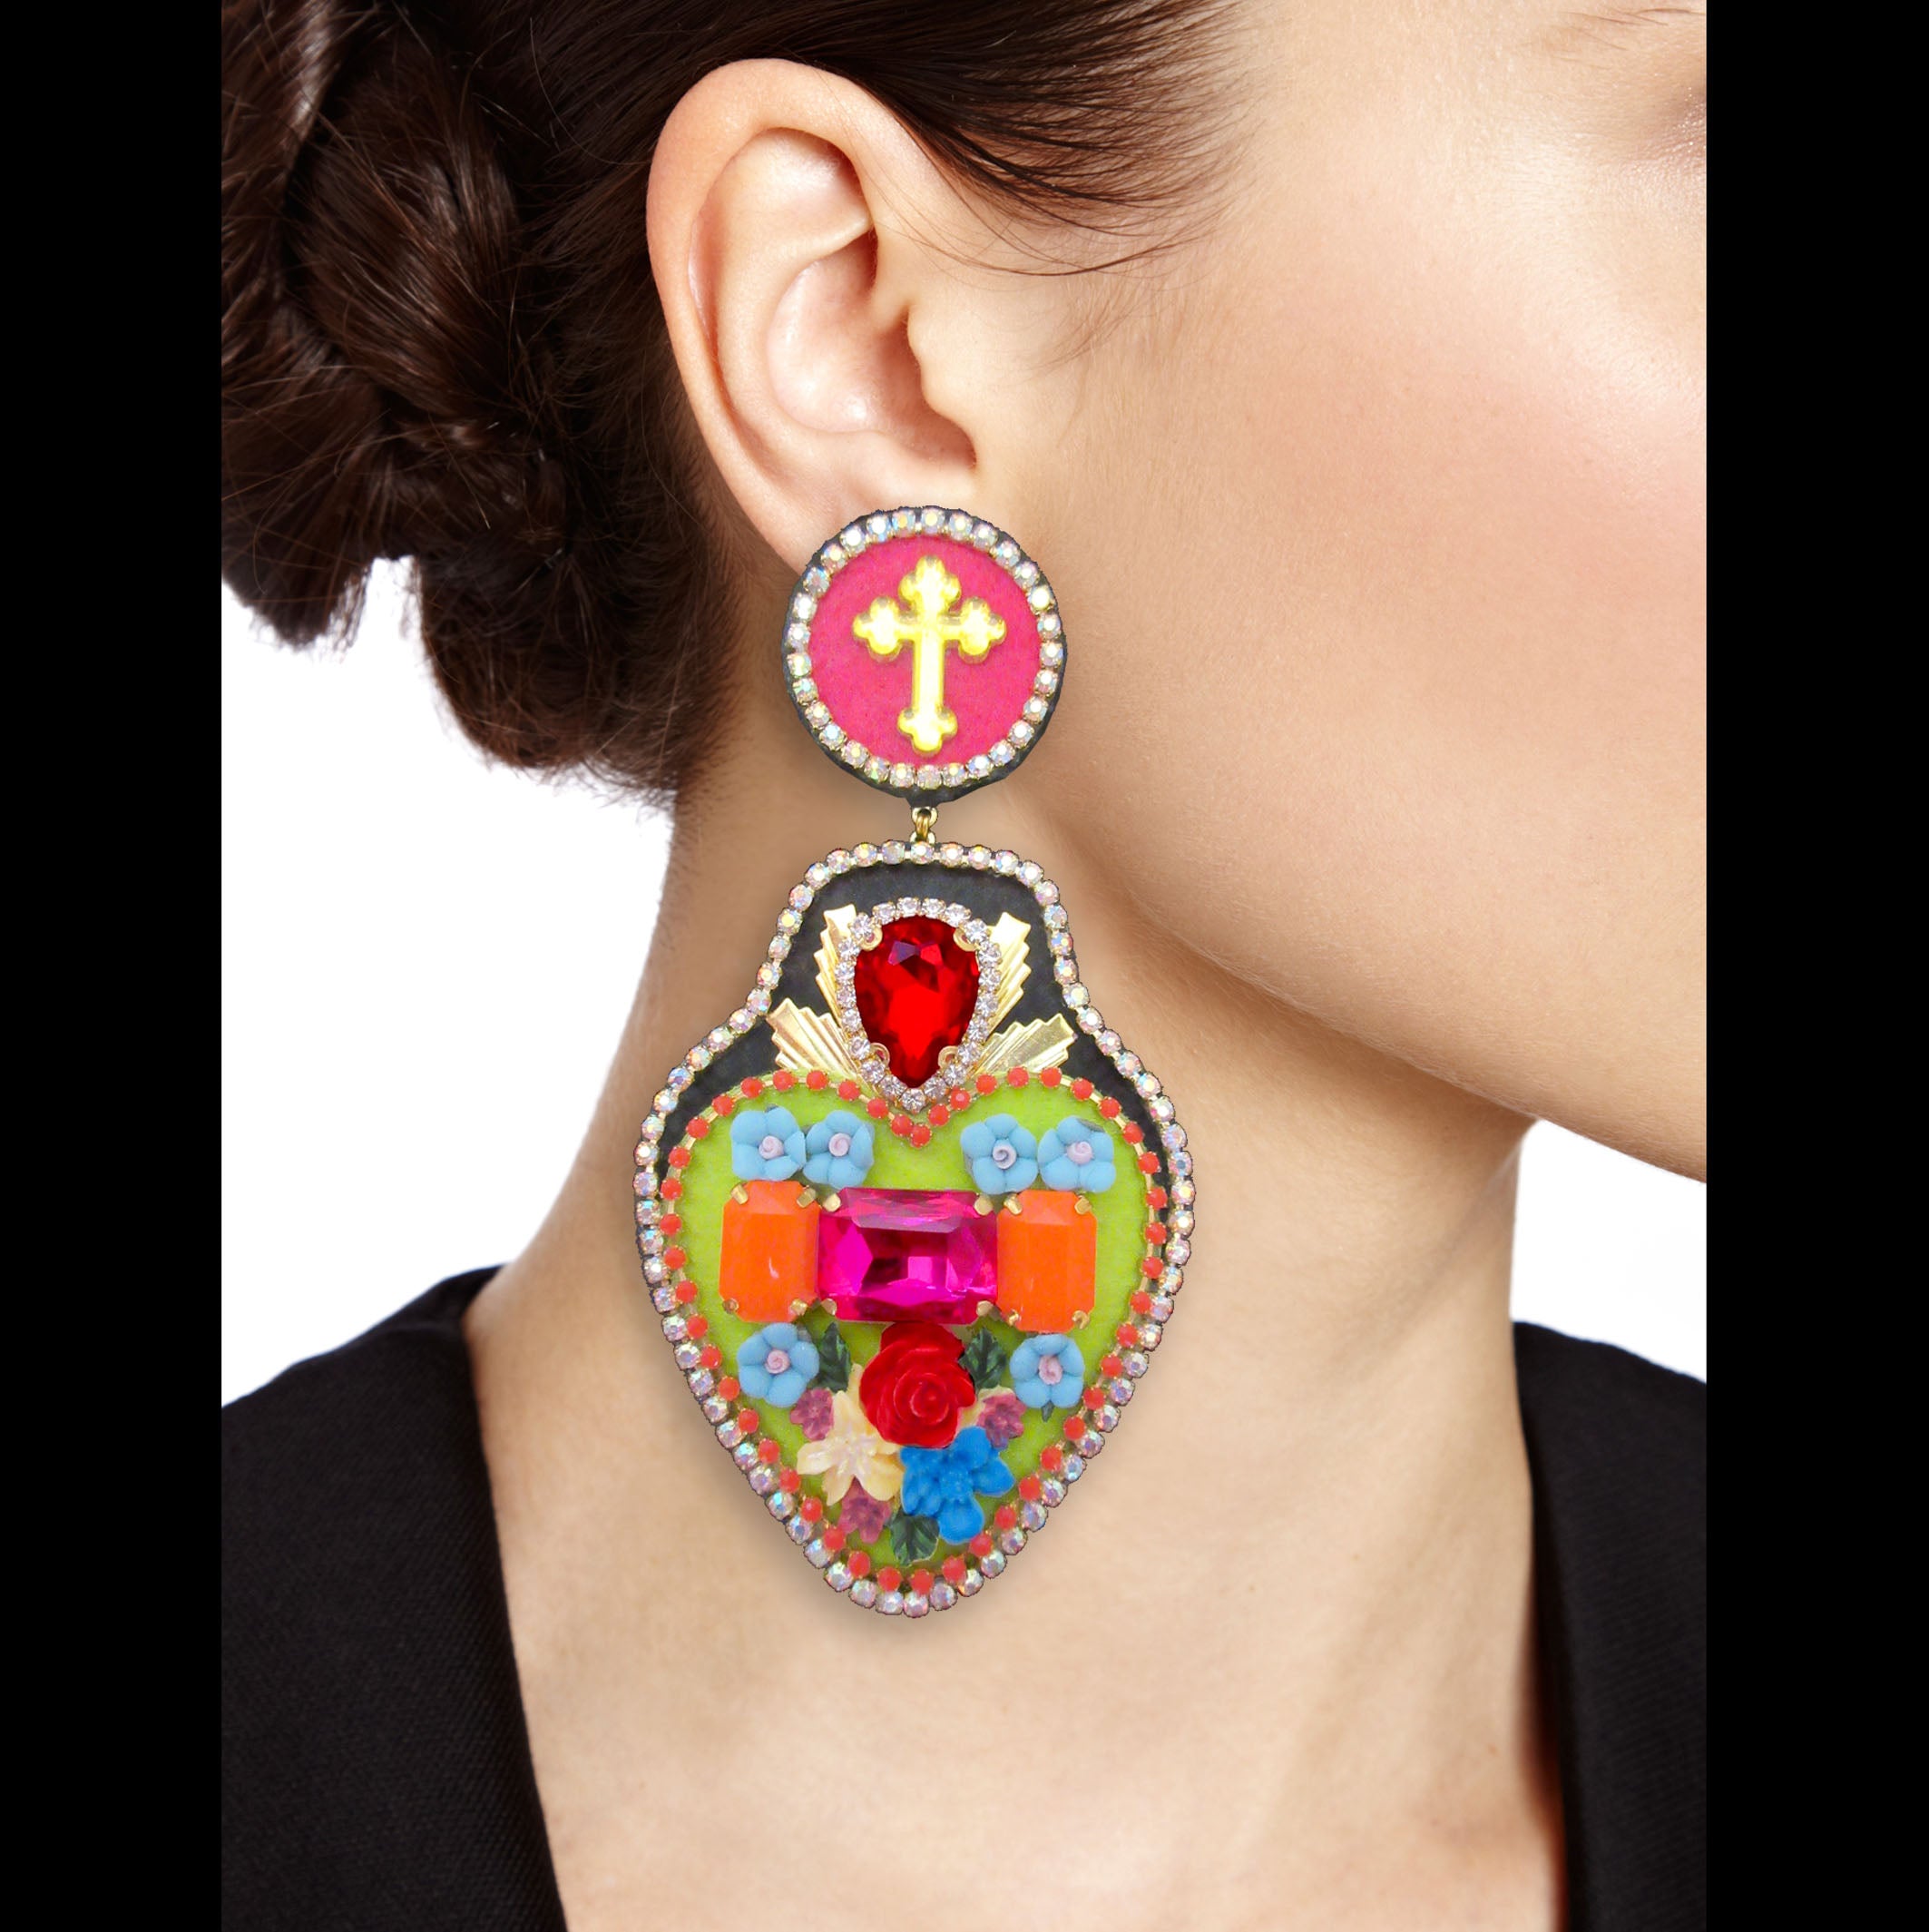 mouchkine jewelry handmade in france statement exvoto pendant earrings 